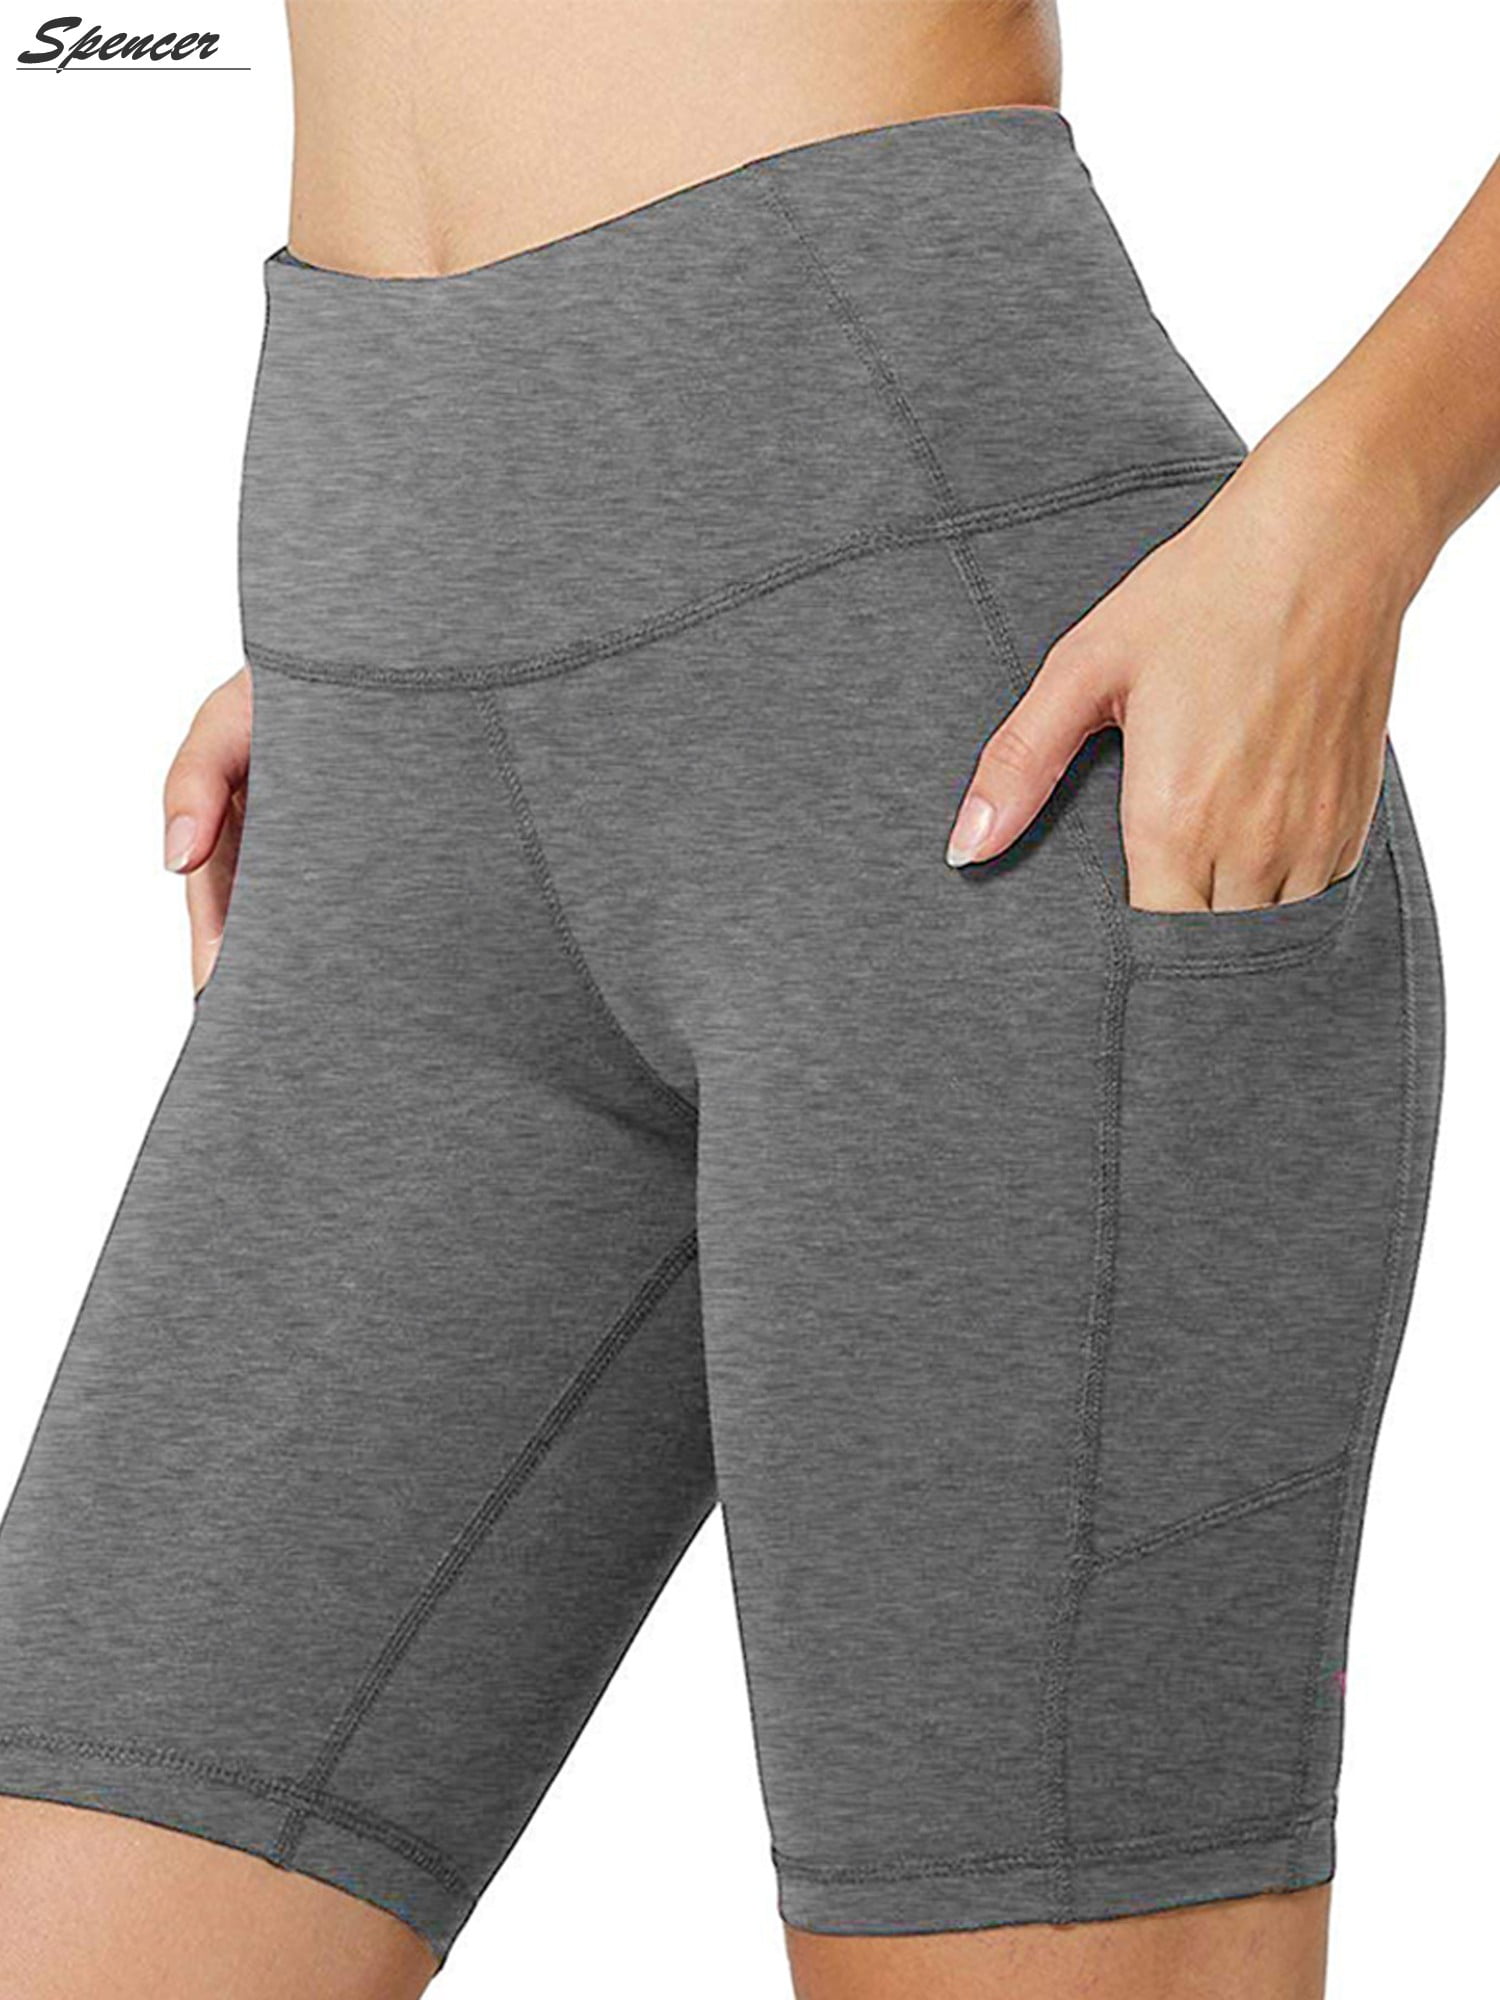 Women High Waist Workout Yoga Shorts Tummy Control Pockets Sports Fitness Pants